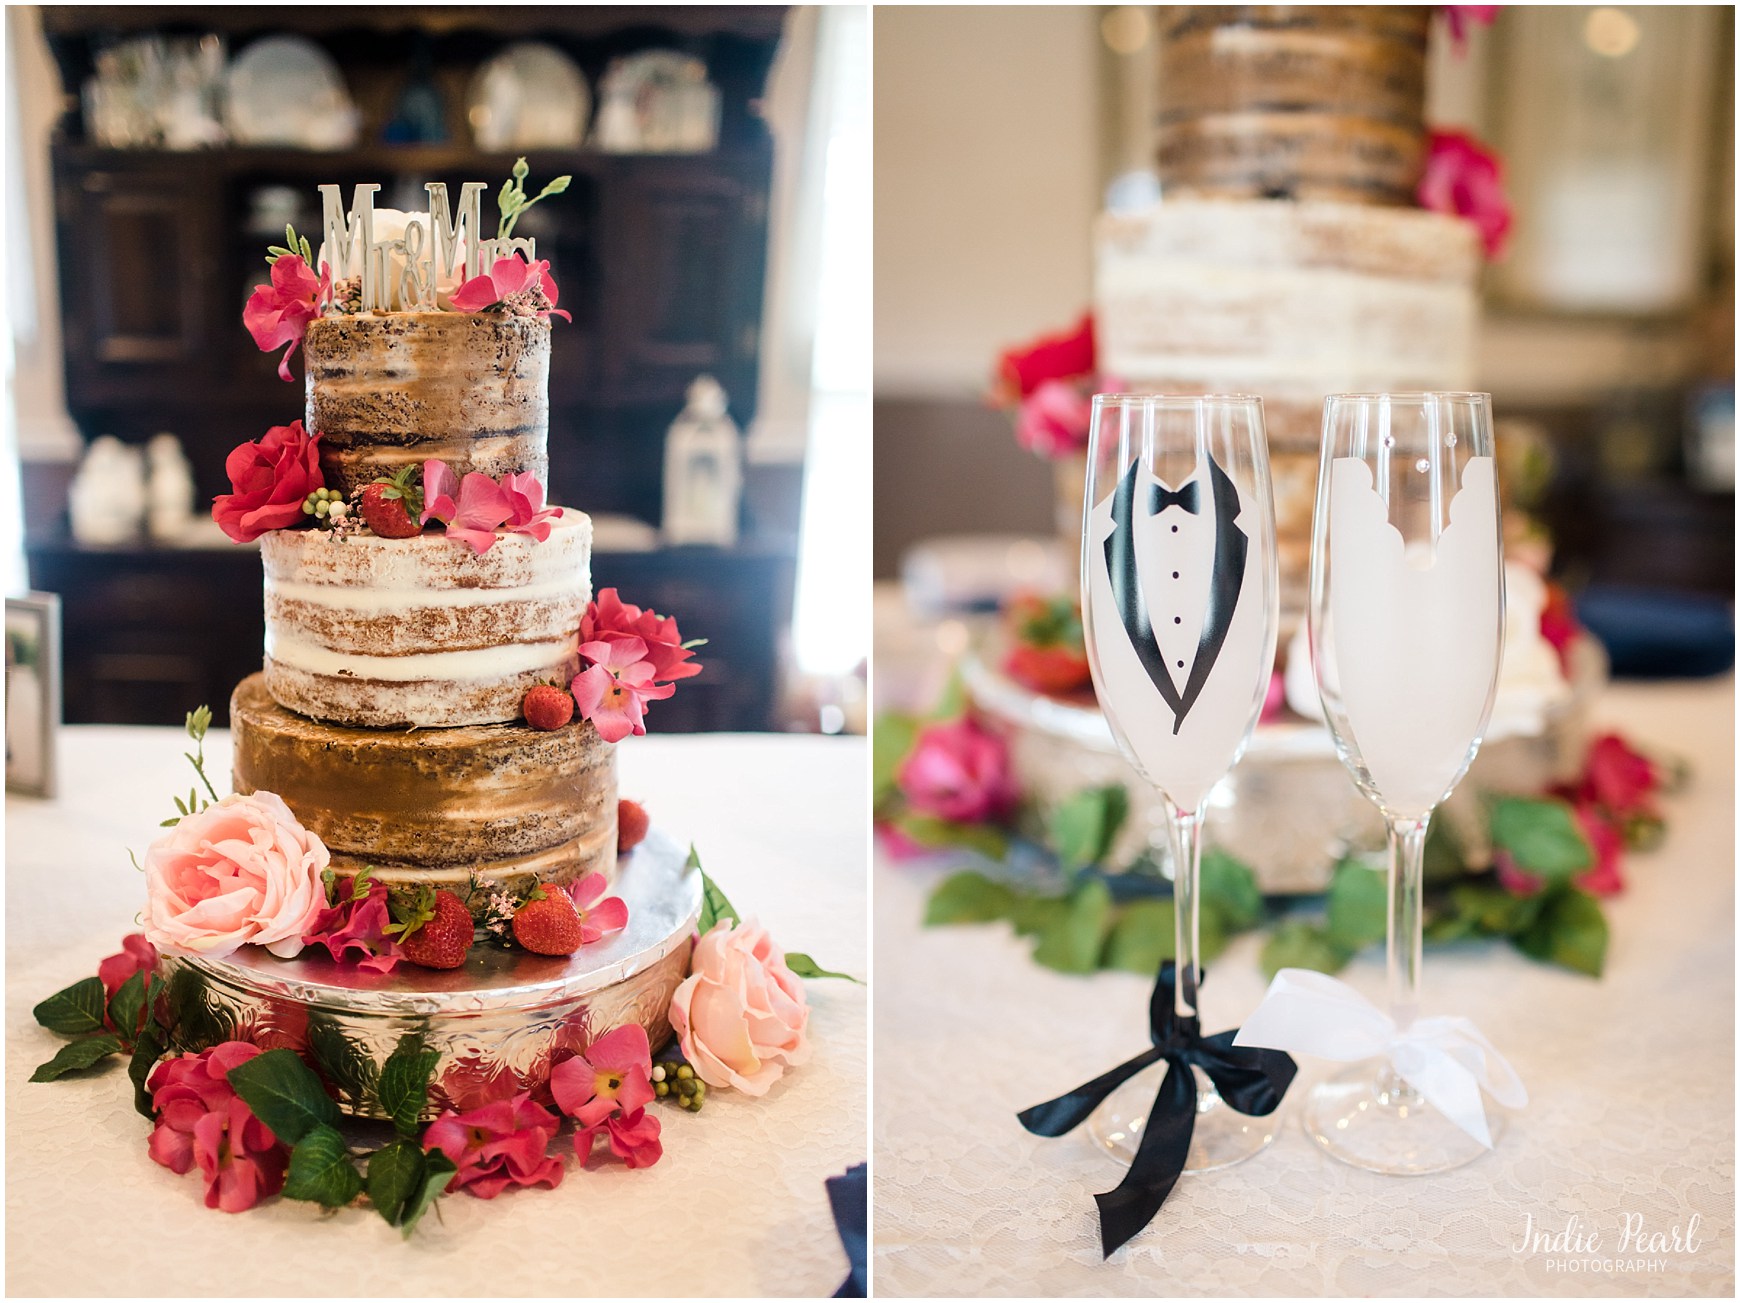 Naked Wedding Cake with flowers